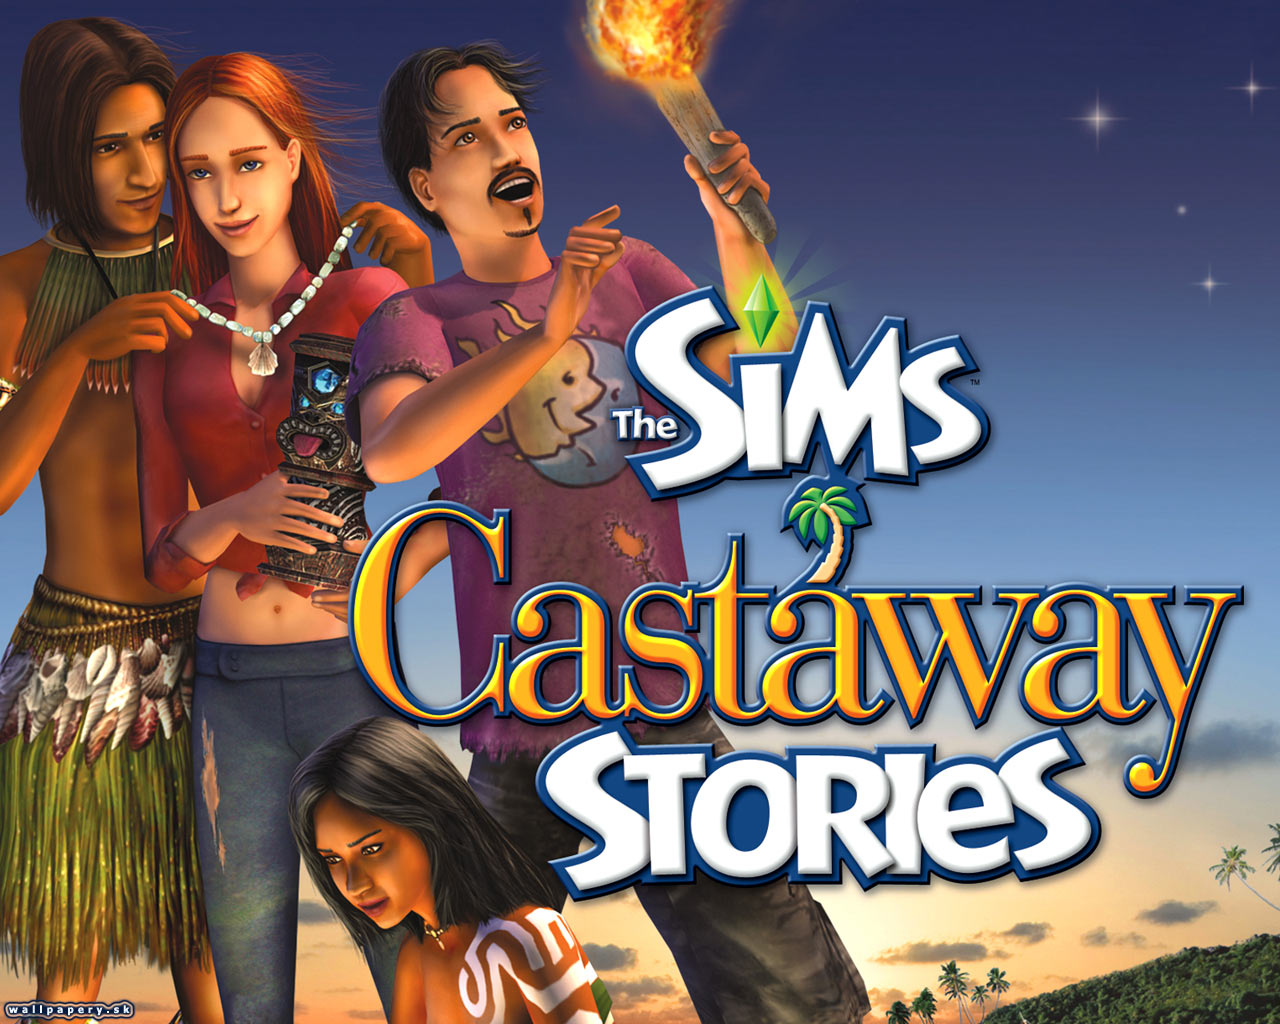 The Sims Castaway Stories - wallpaper 1